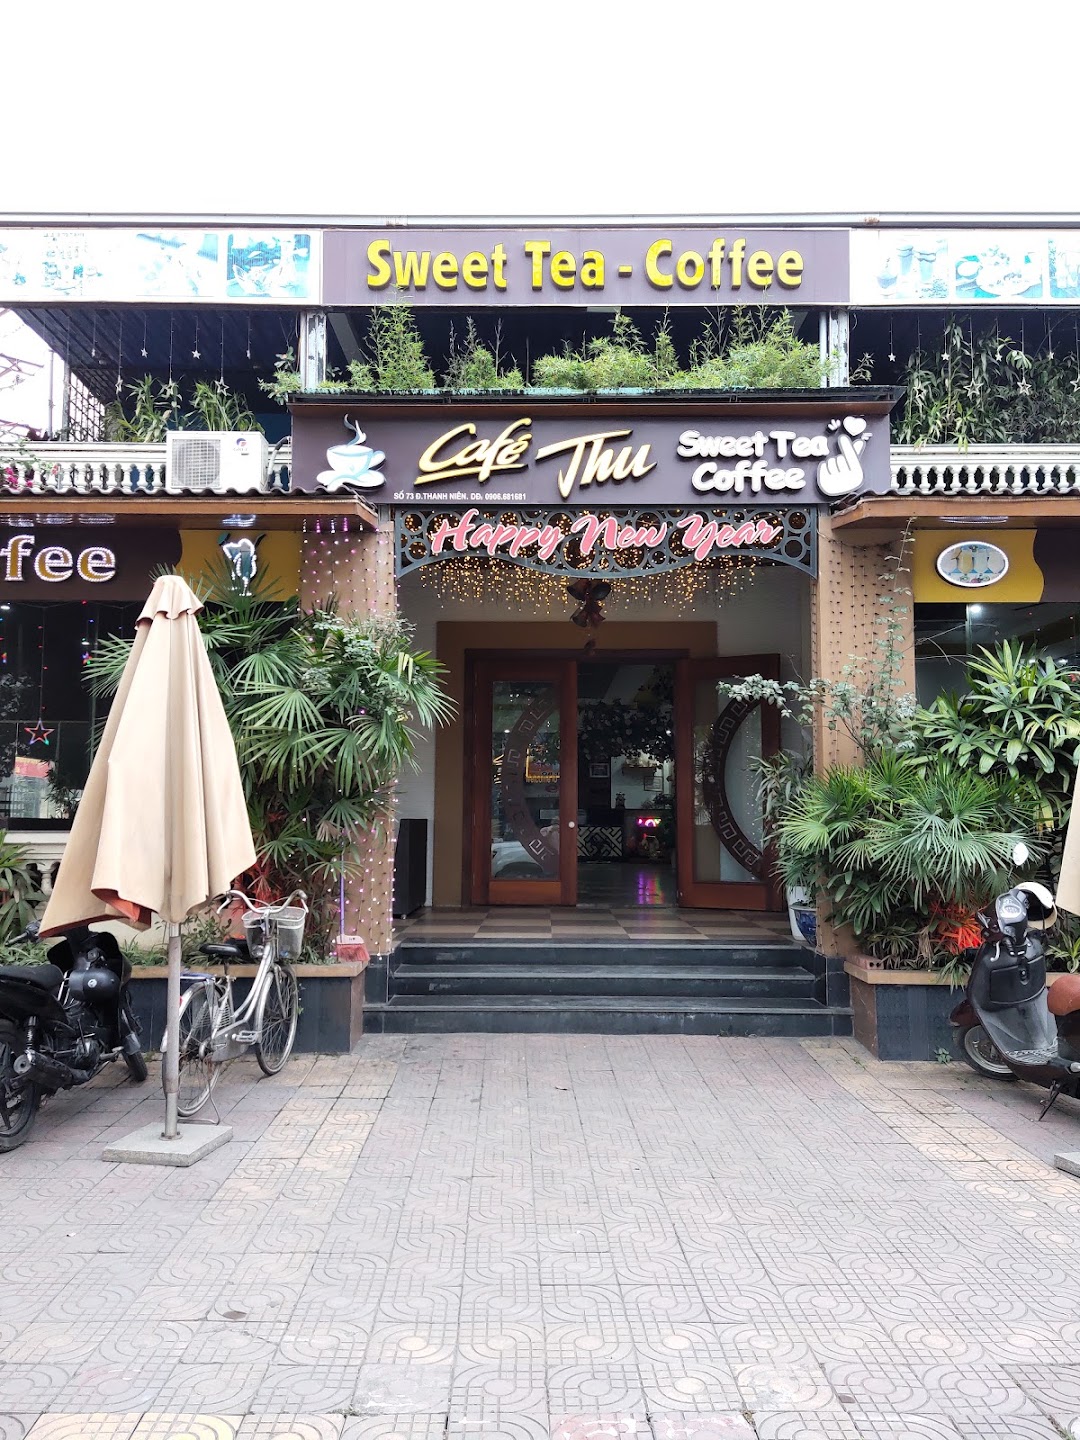 Cafe Thu - Sweet Tea Coffee